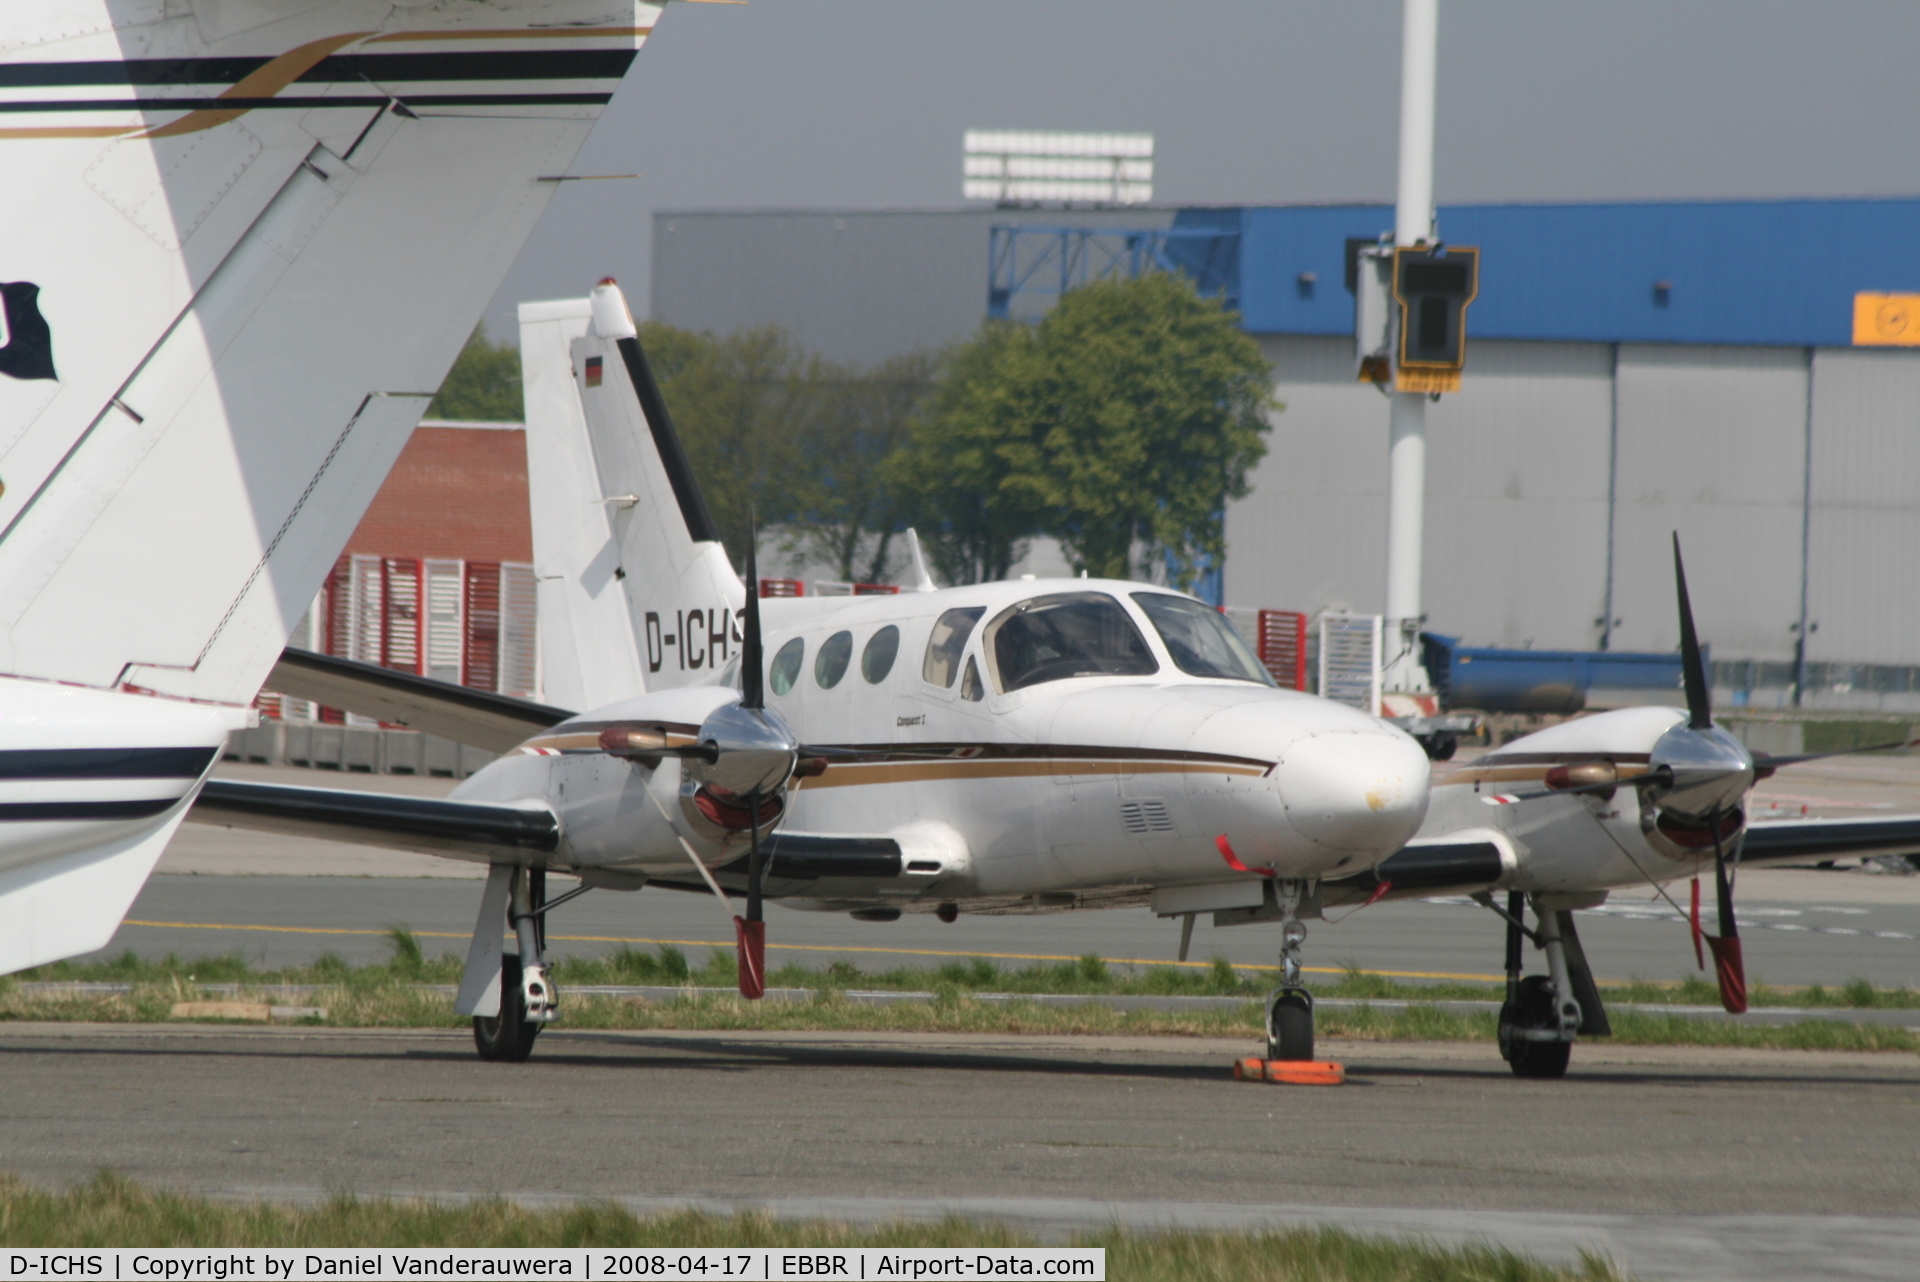 D-ICHS, 1989 Cessna 425 Conquest 1 C/N 425-0233, parked on General Aviation apron (Abelag)